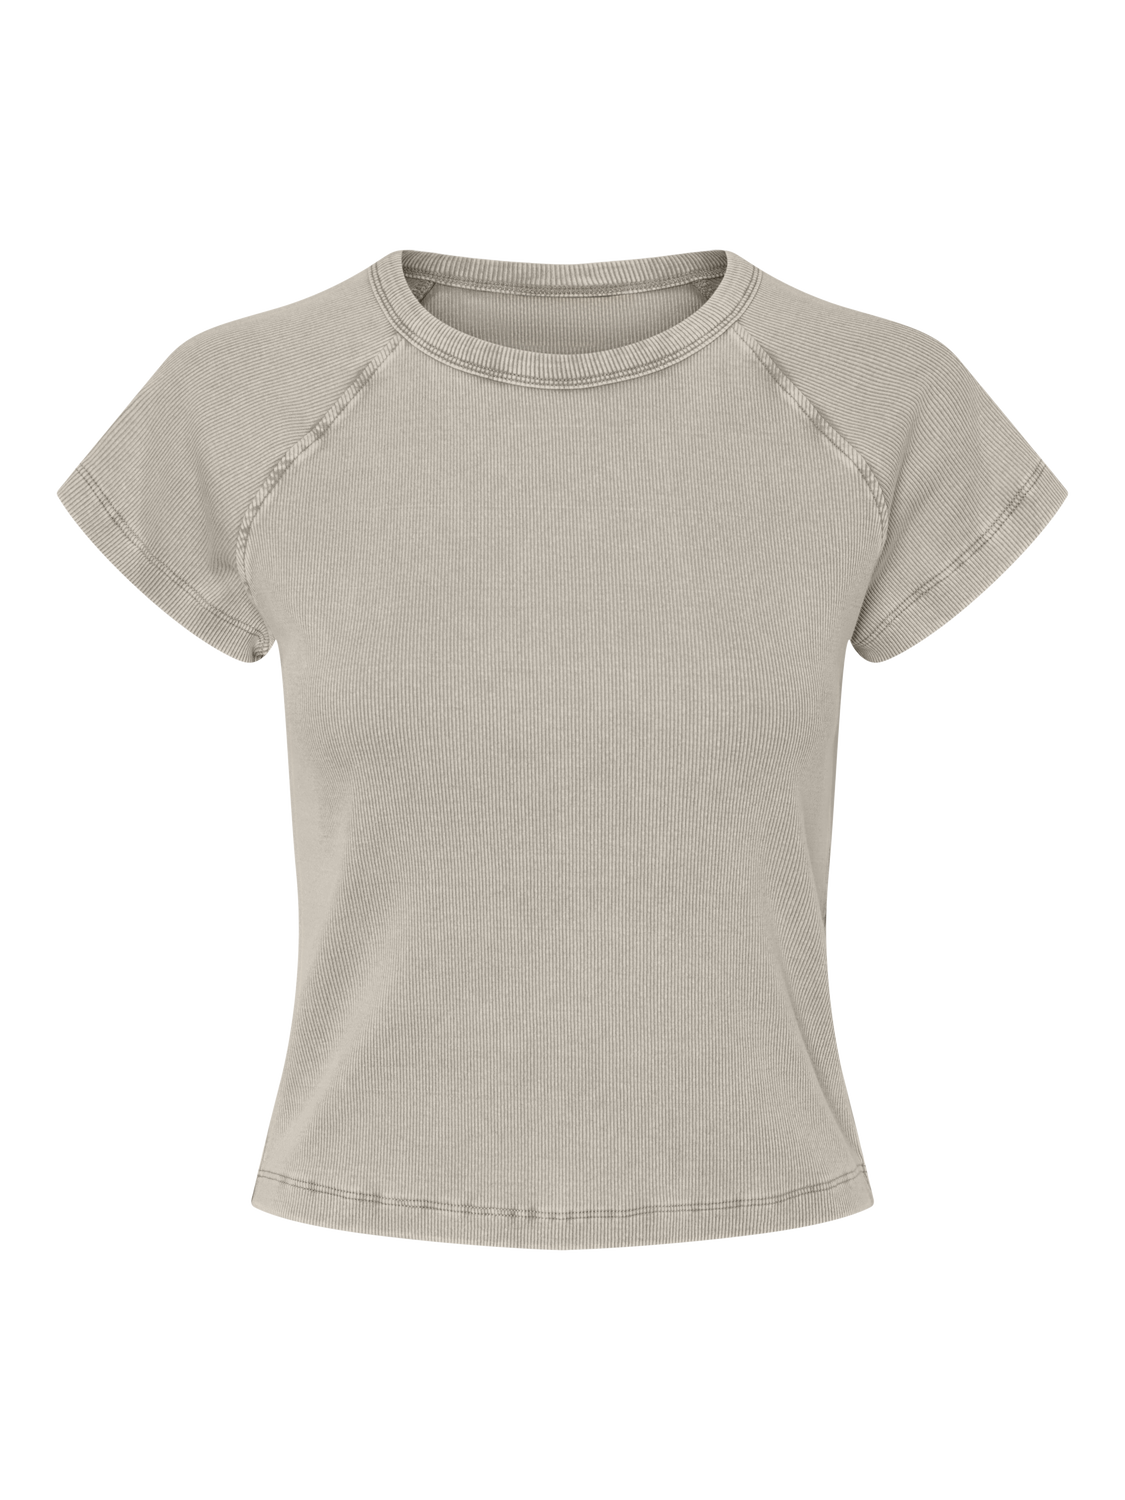 VMJANE T-Shirt - Silver Lining